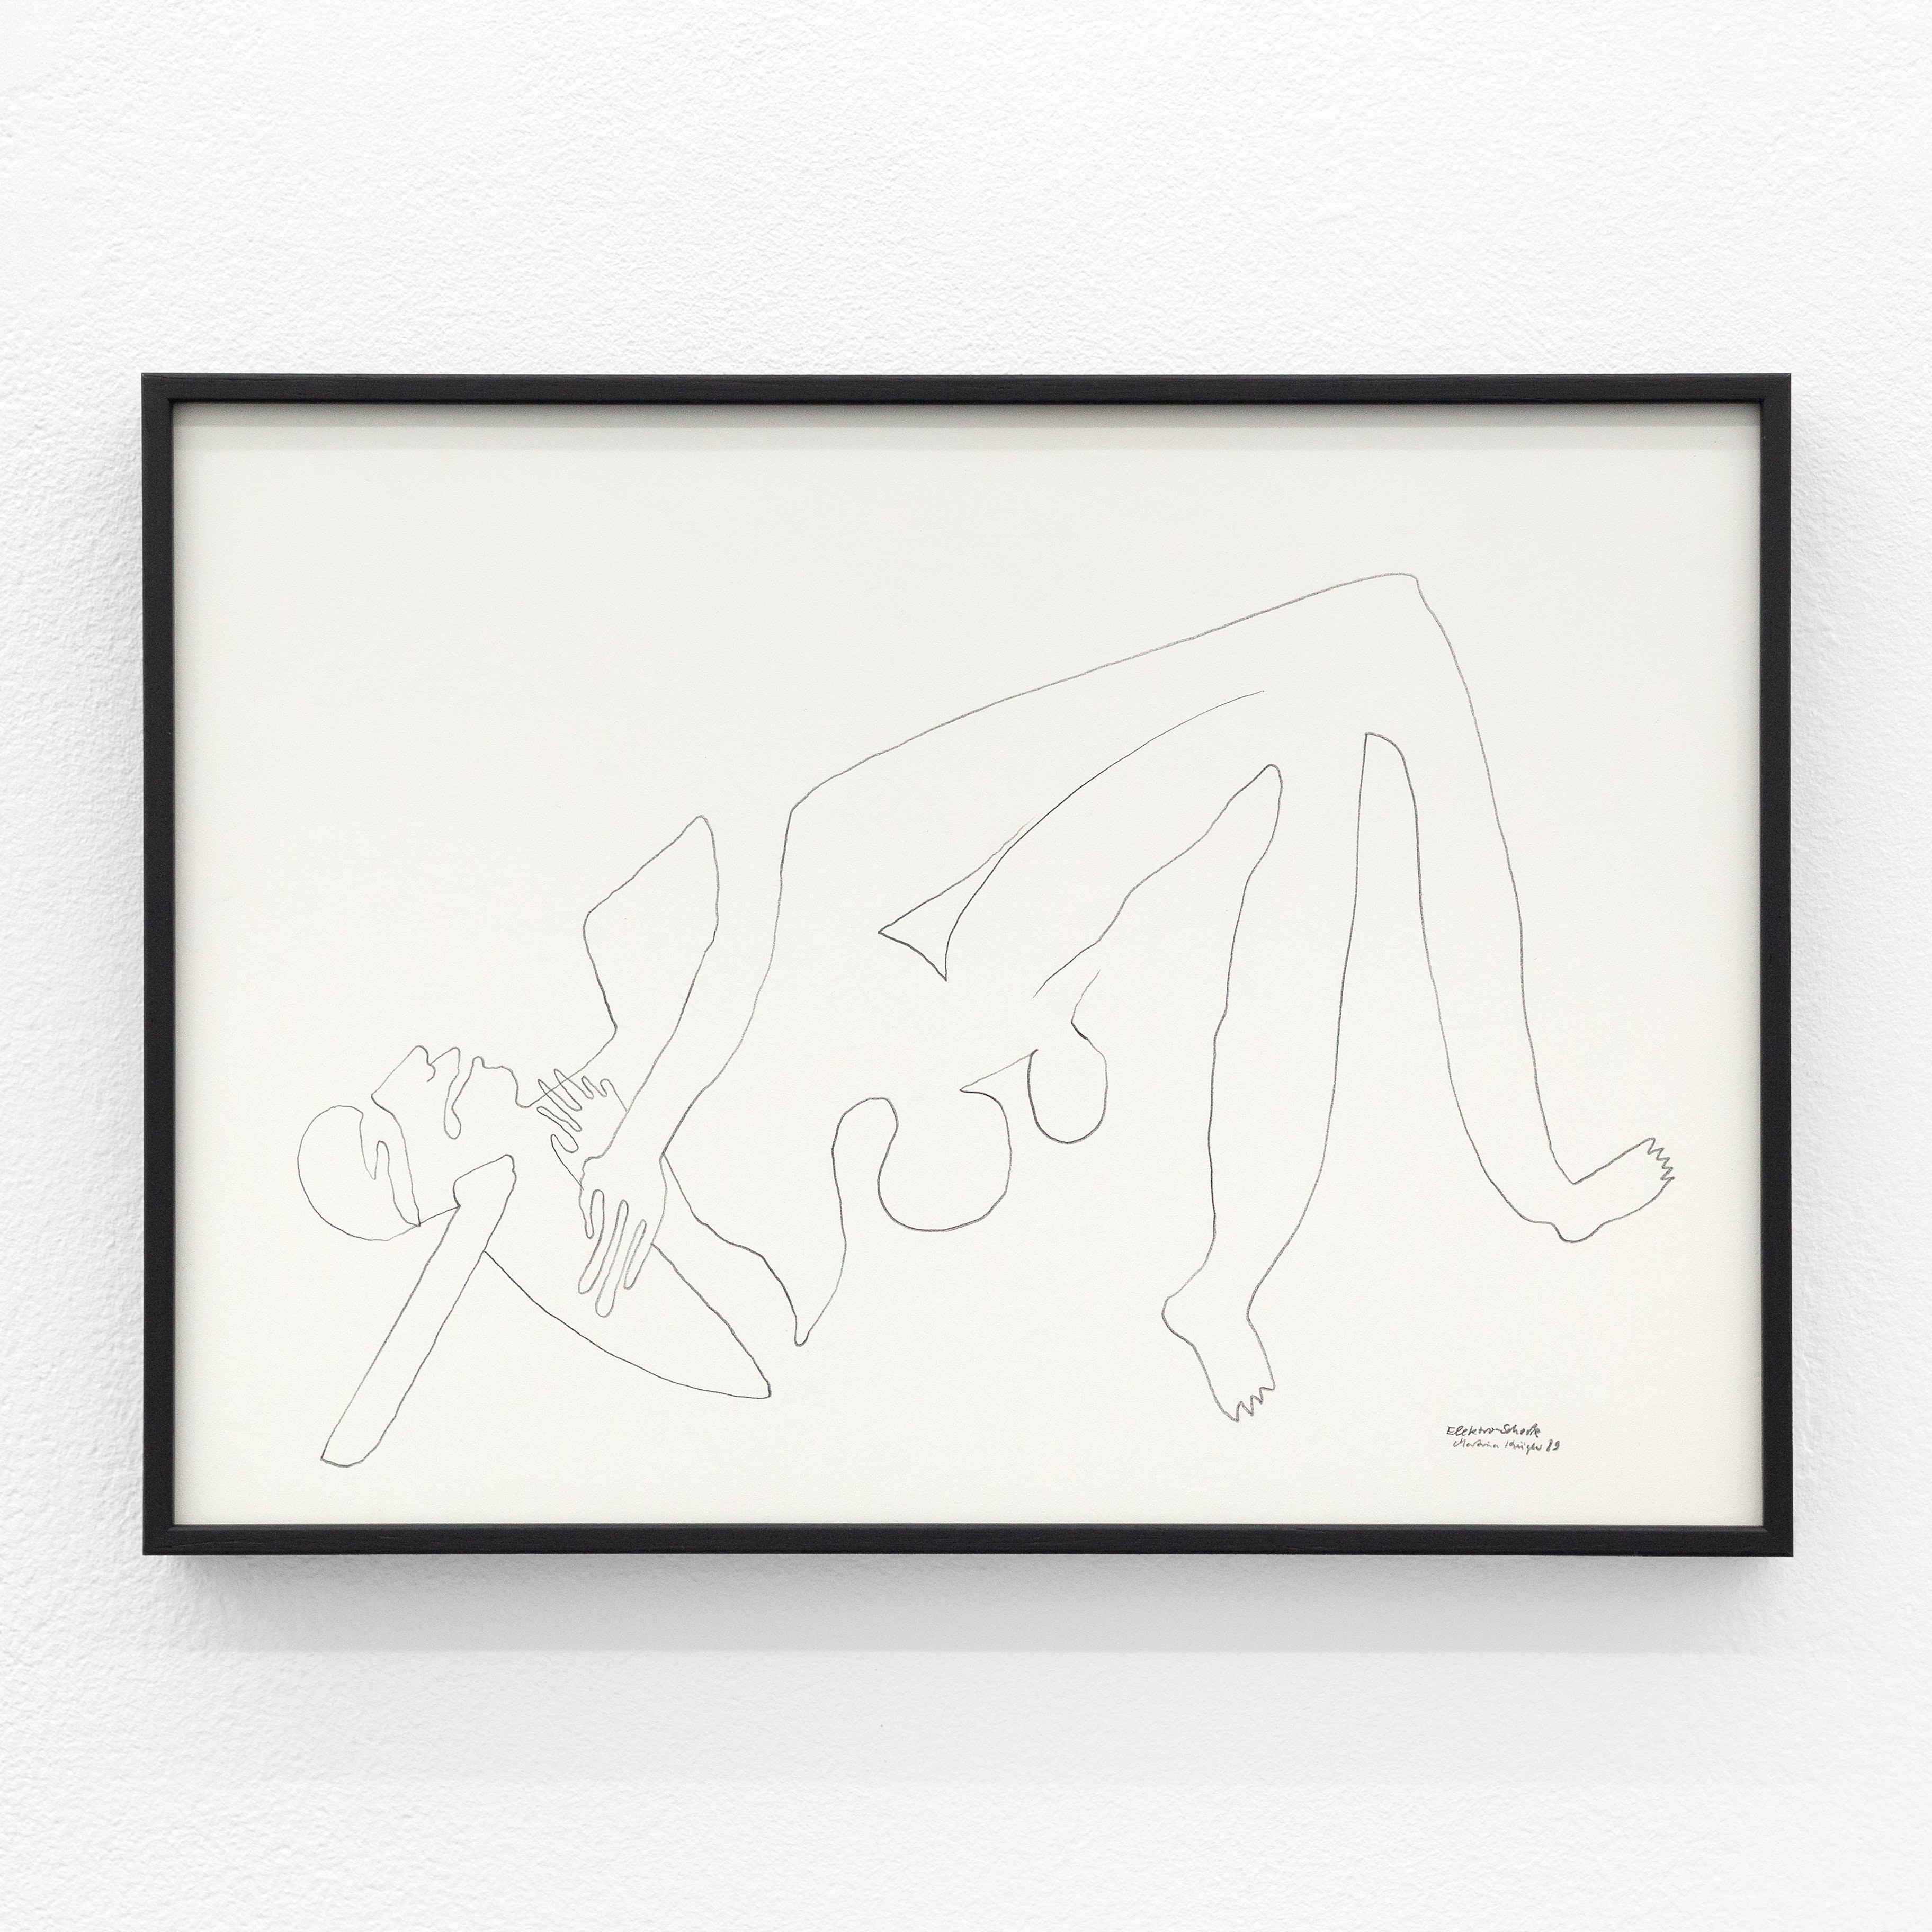 Martina KÃ¼gler, Elektroschock, 1989 â€“ Graphite on paper, 21 Ã— 29,7 cm. Courtesy of Freundeskreis Martina KÃ¼gler